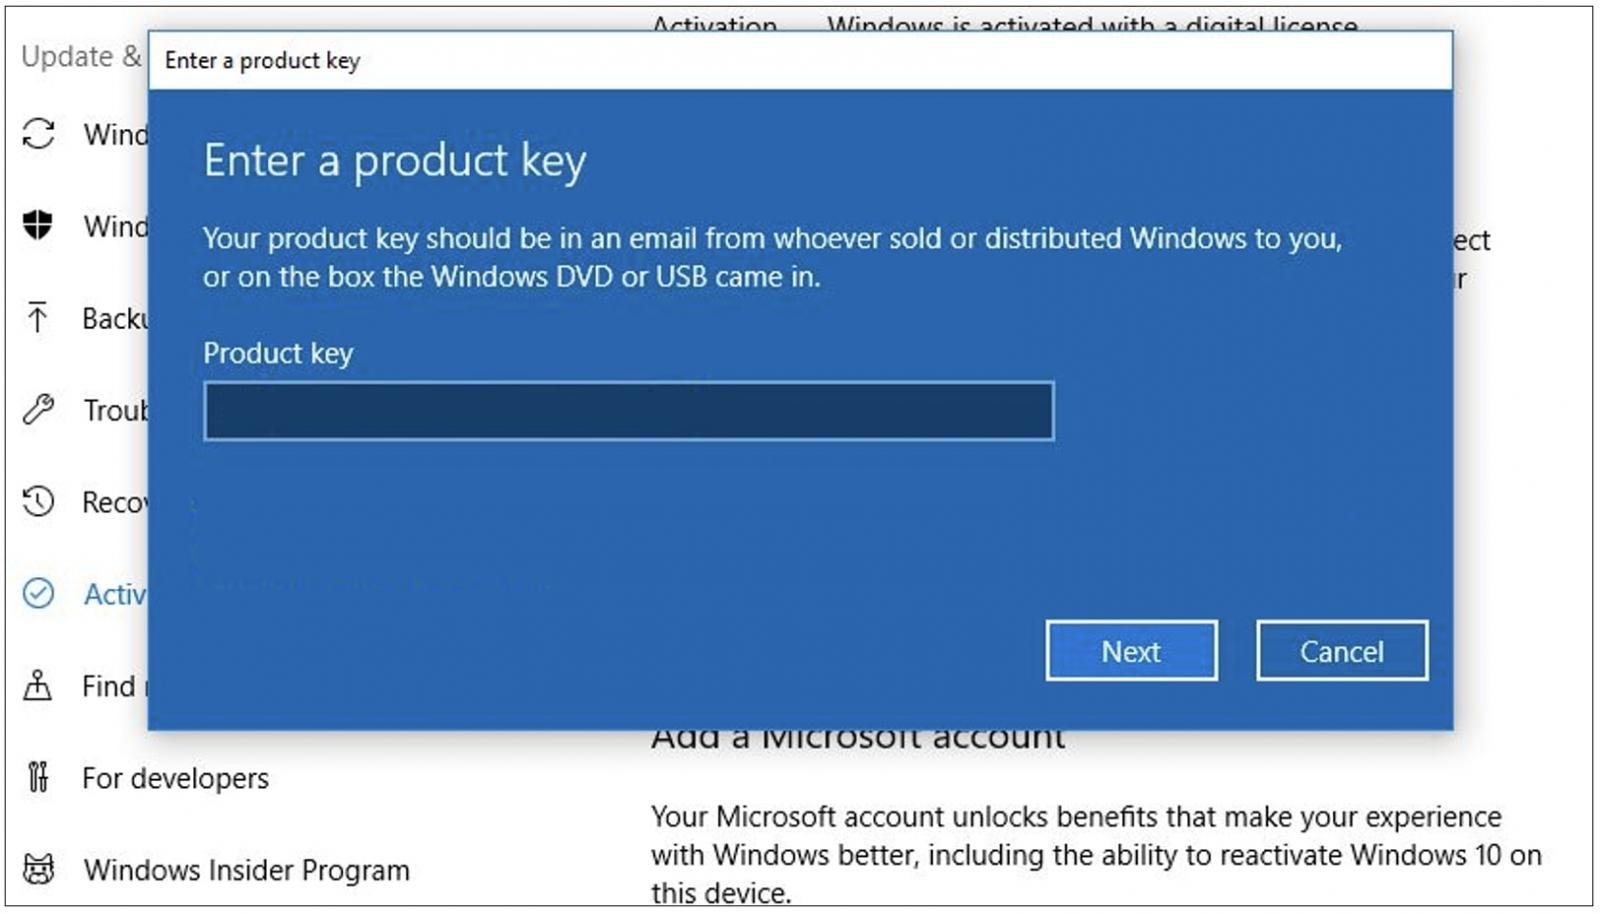 Typical Microsoft Windows 10 activation workflow